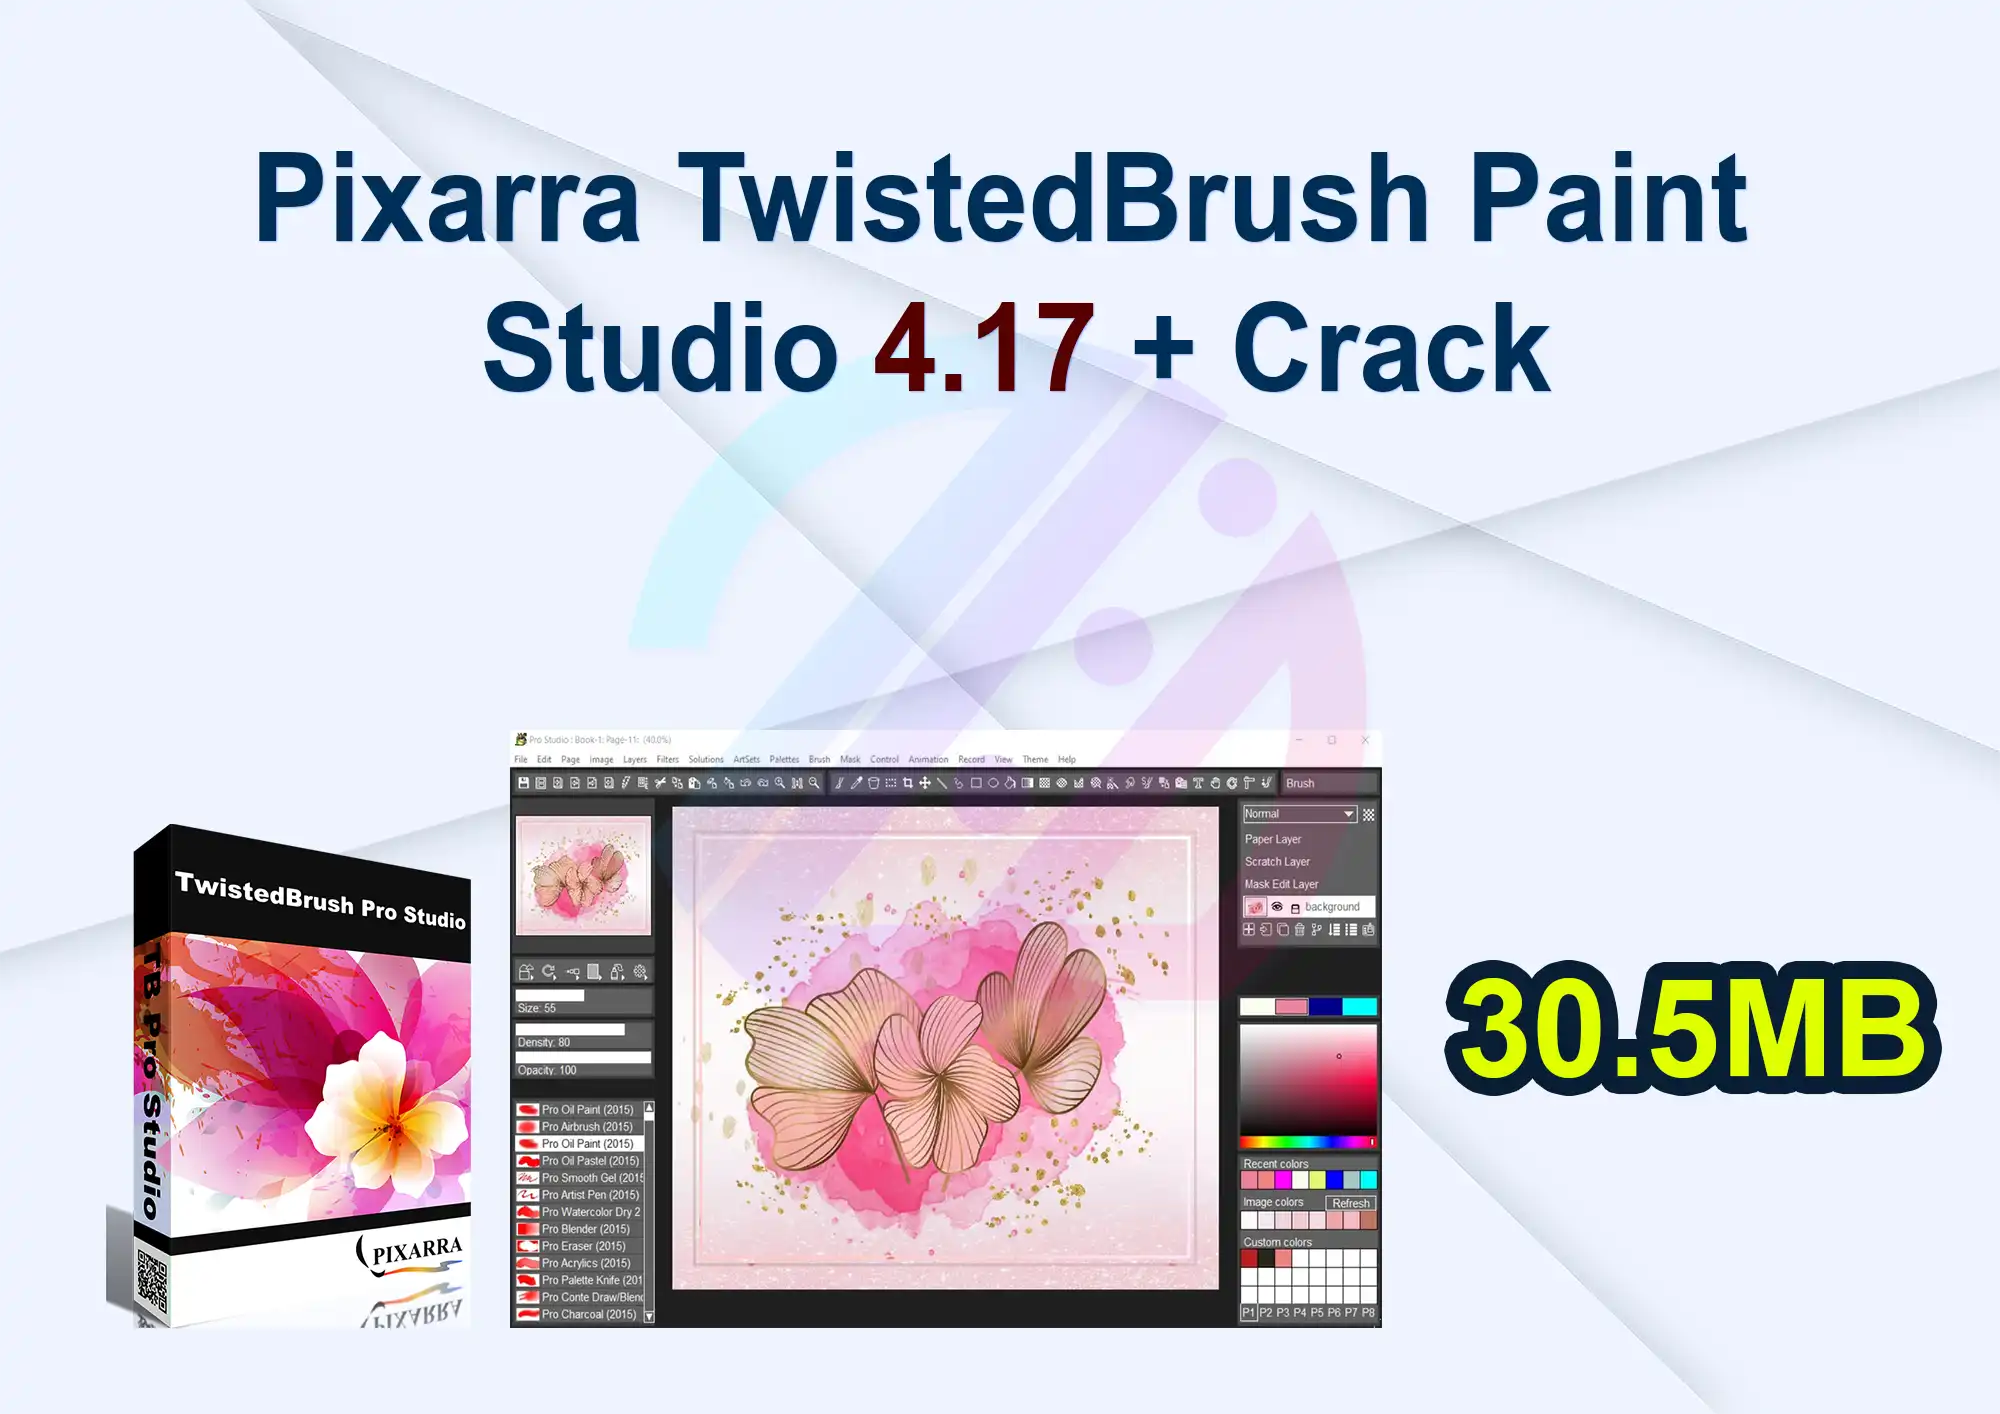 Pixarra TwistedBrush Paint Studio 4.17 + Crack